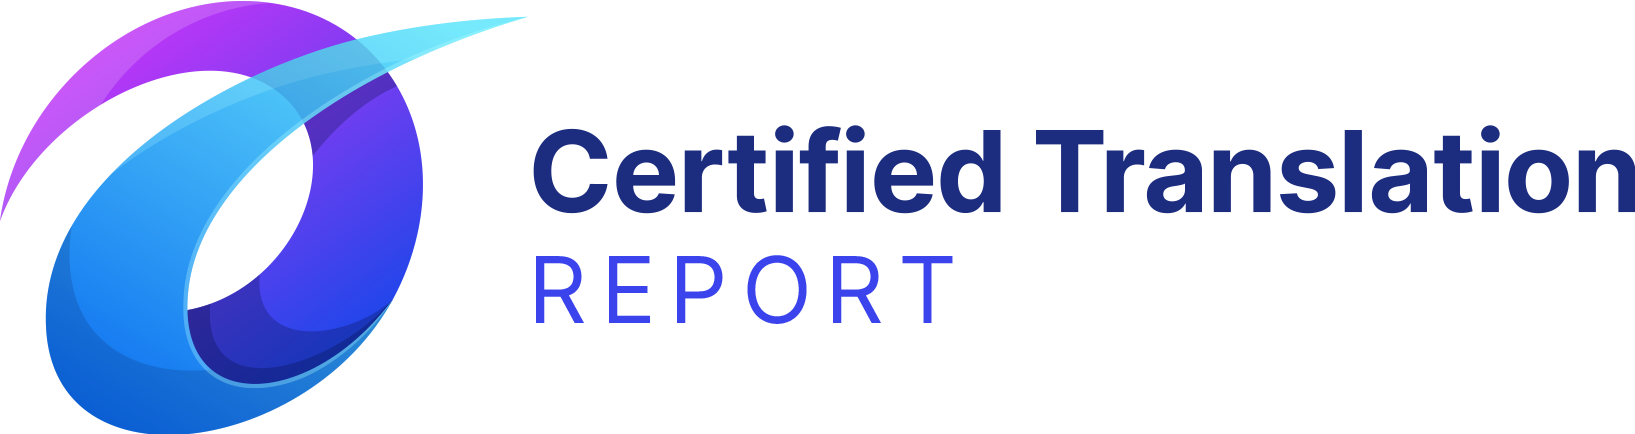 Certified Translation Report Logo